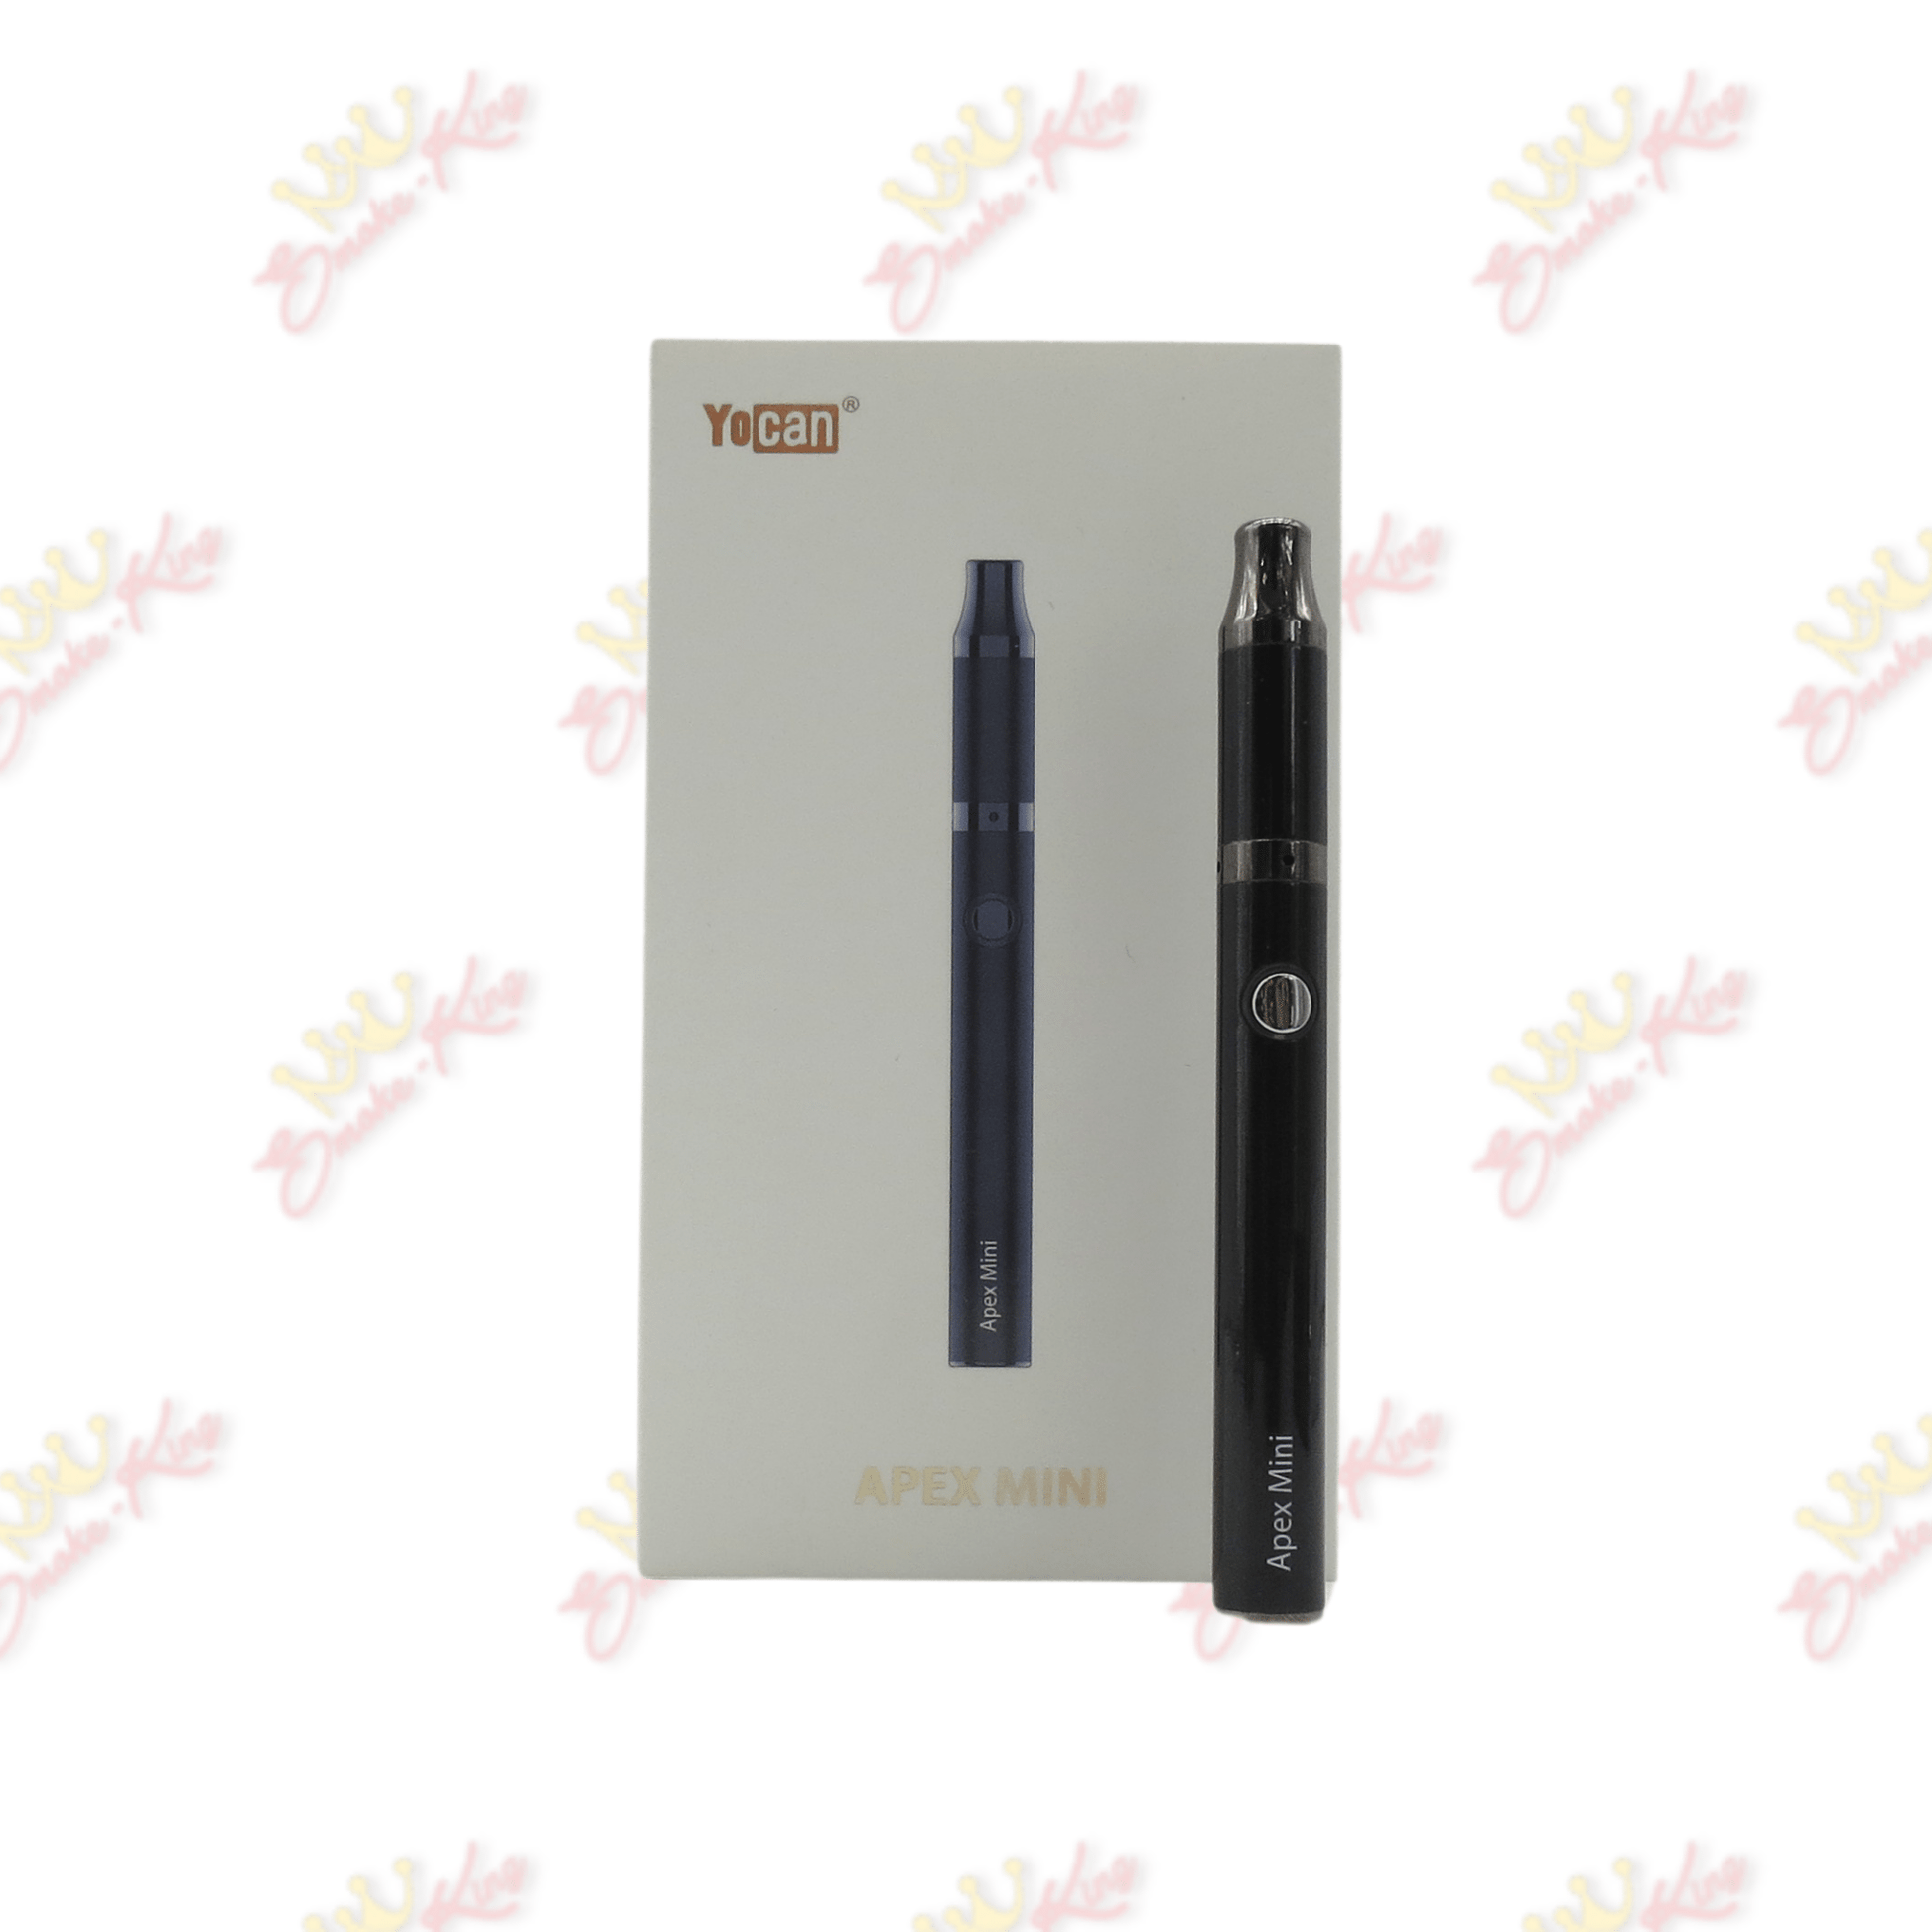 Yocan Apex Mini Vaporizer for Sale, Pen Vaporizer